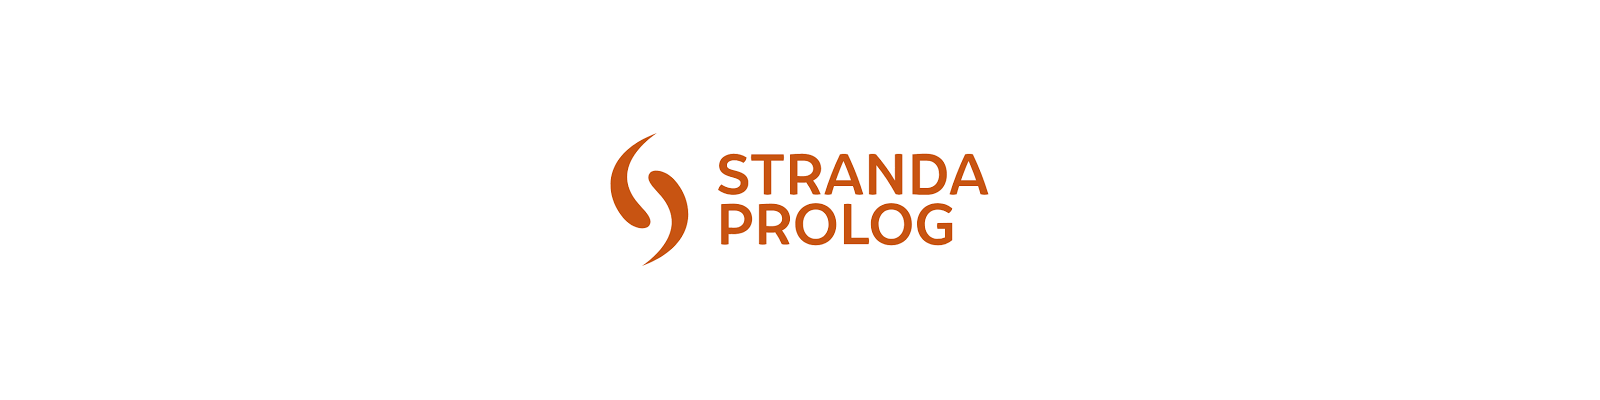 Stranda Prolog